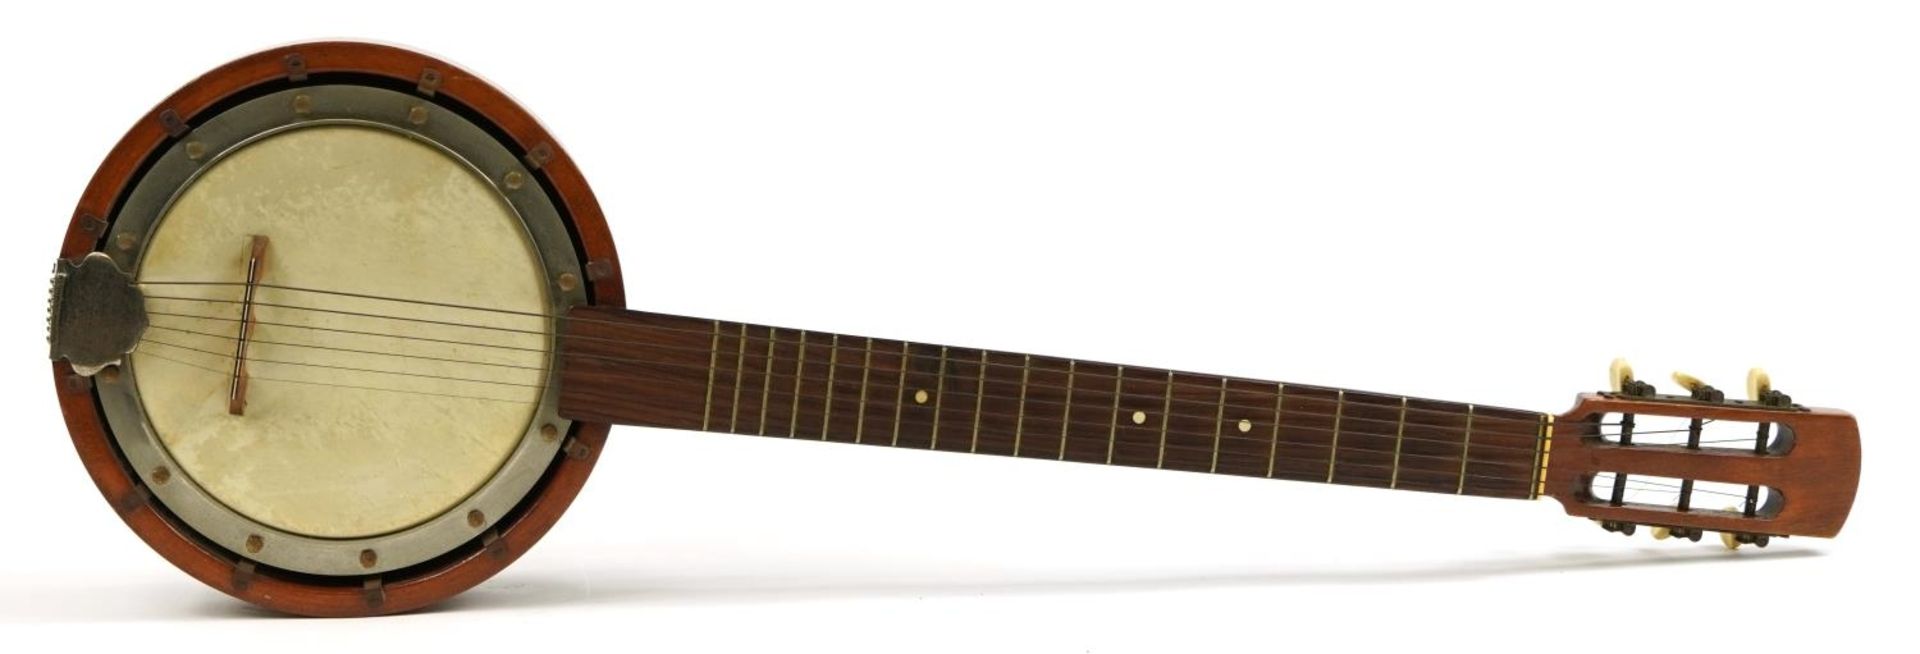 Rosewood and mahogany six string banjo, 88cm in length